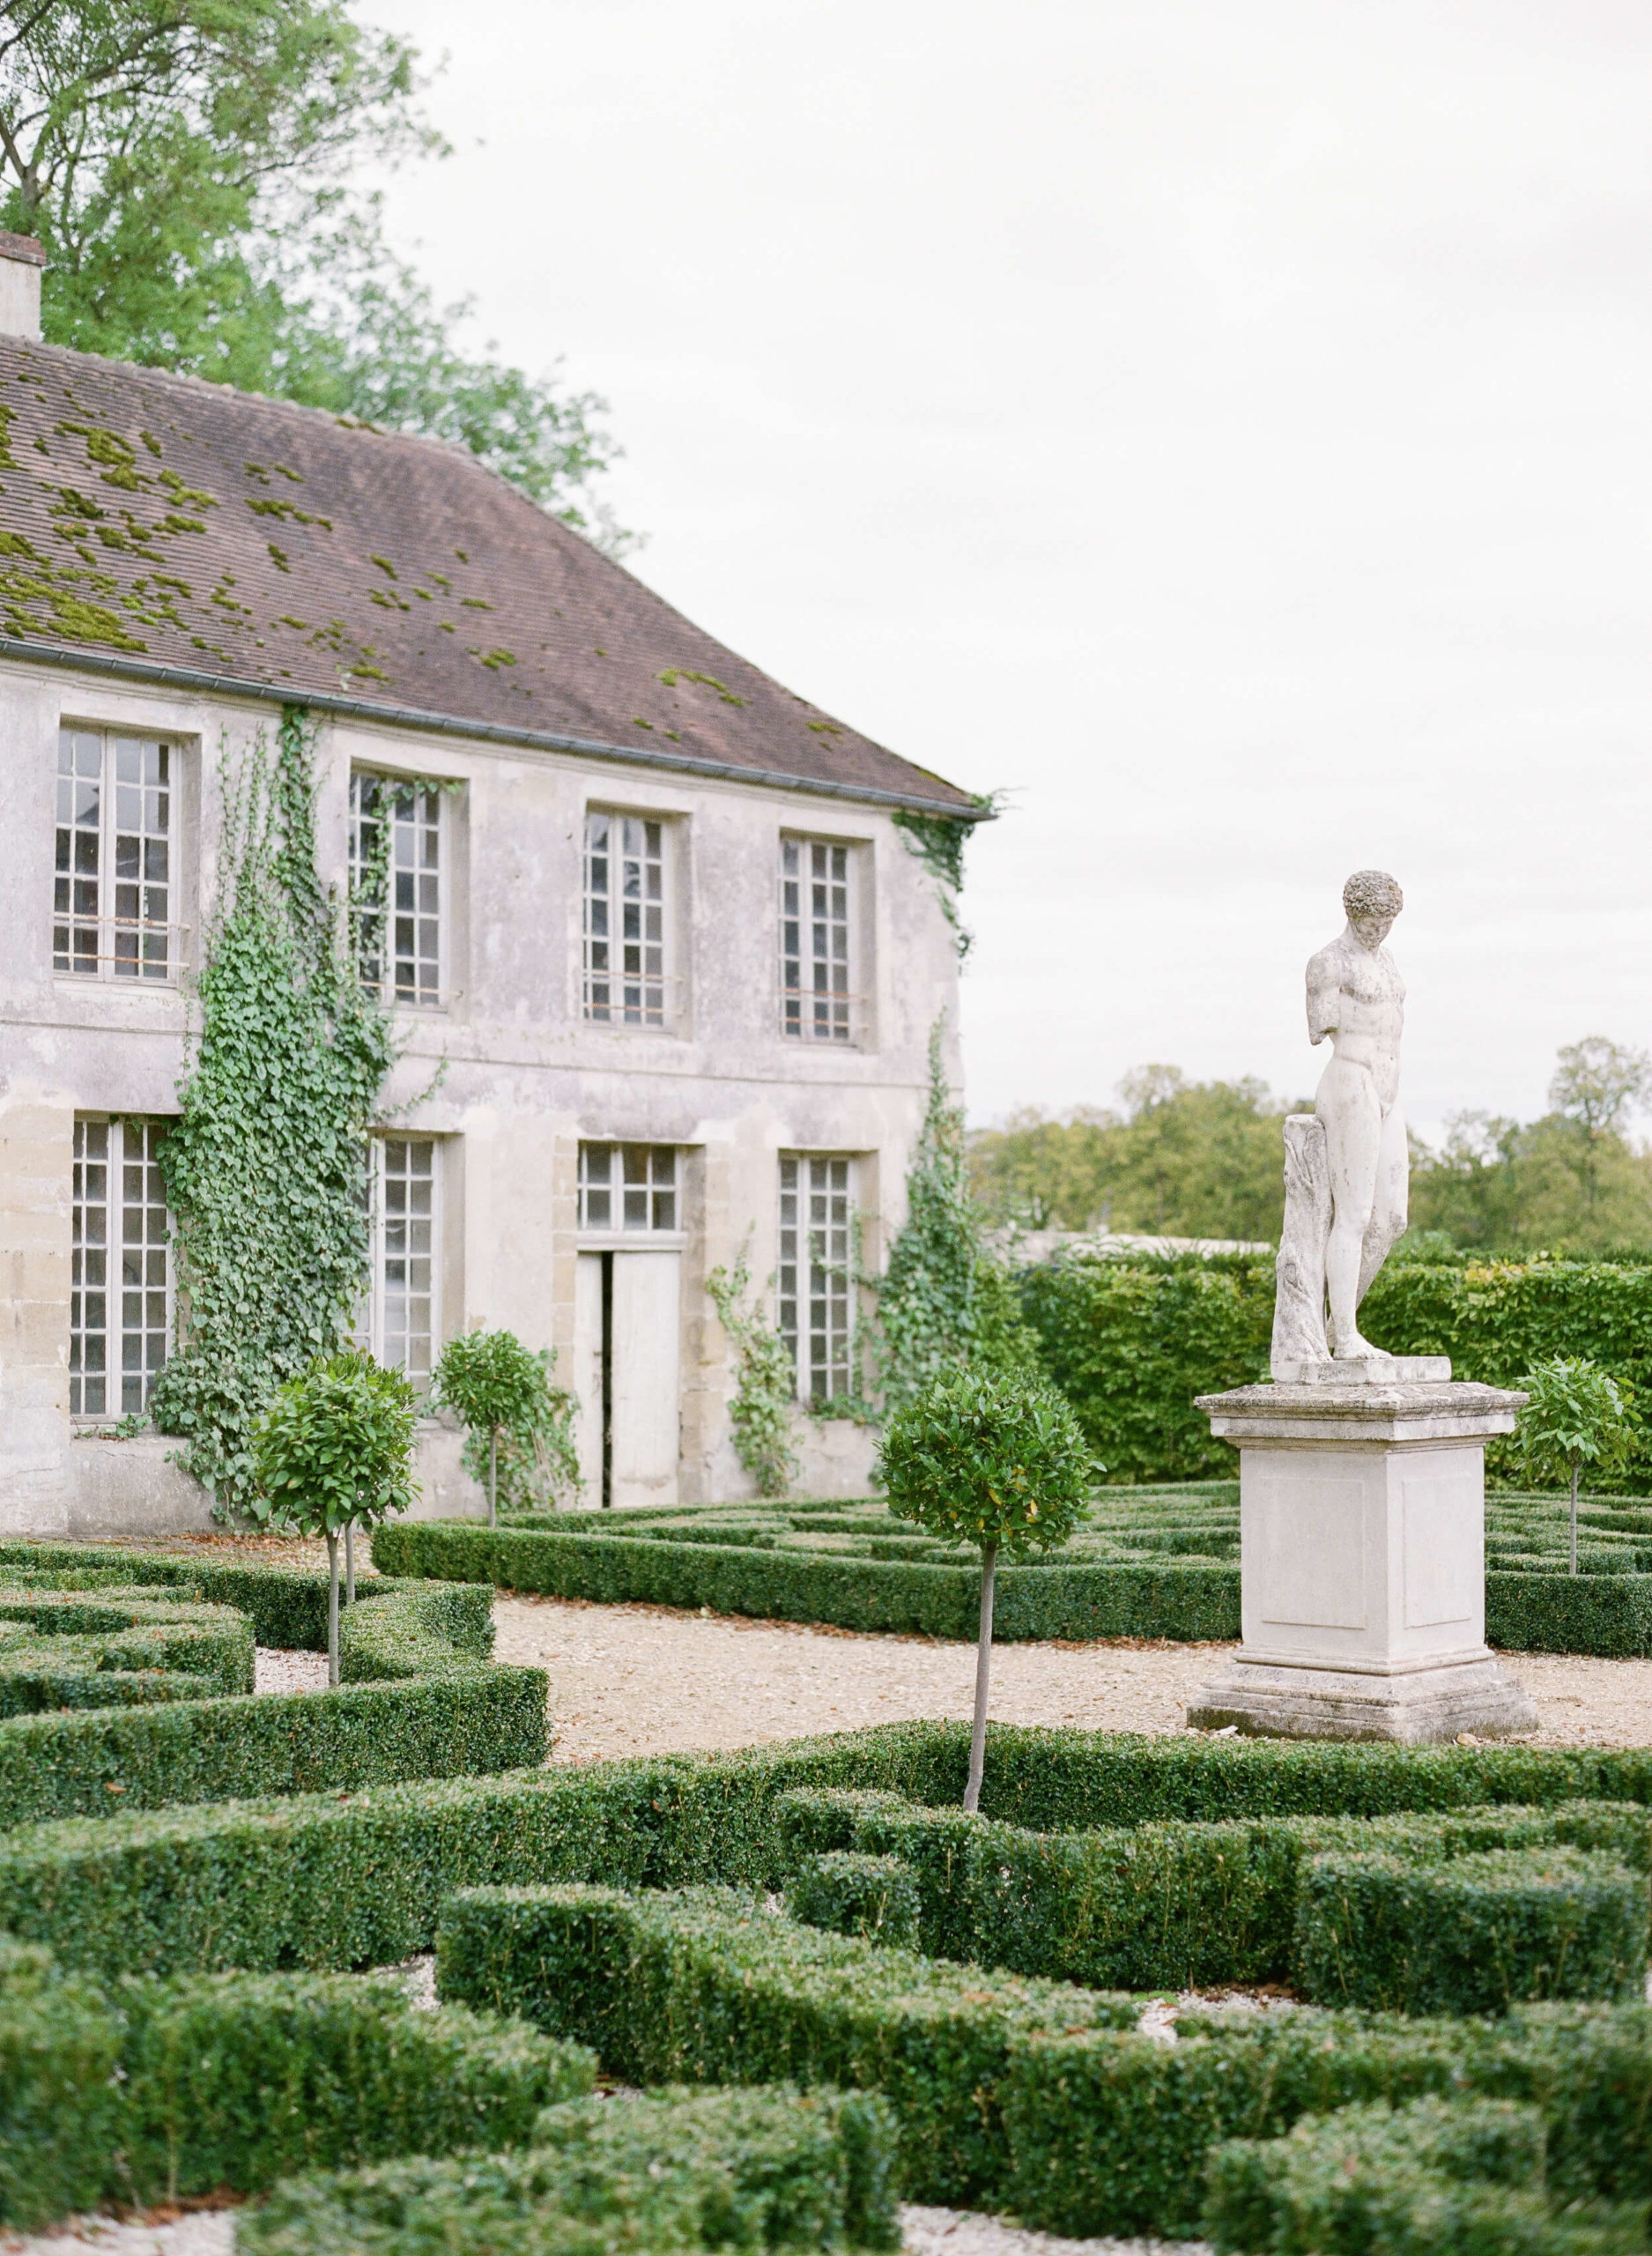 Château de Villette garden